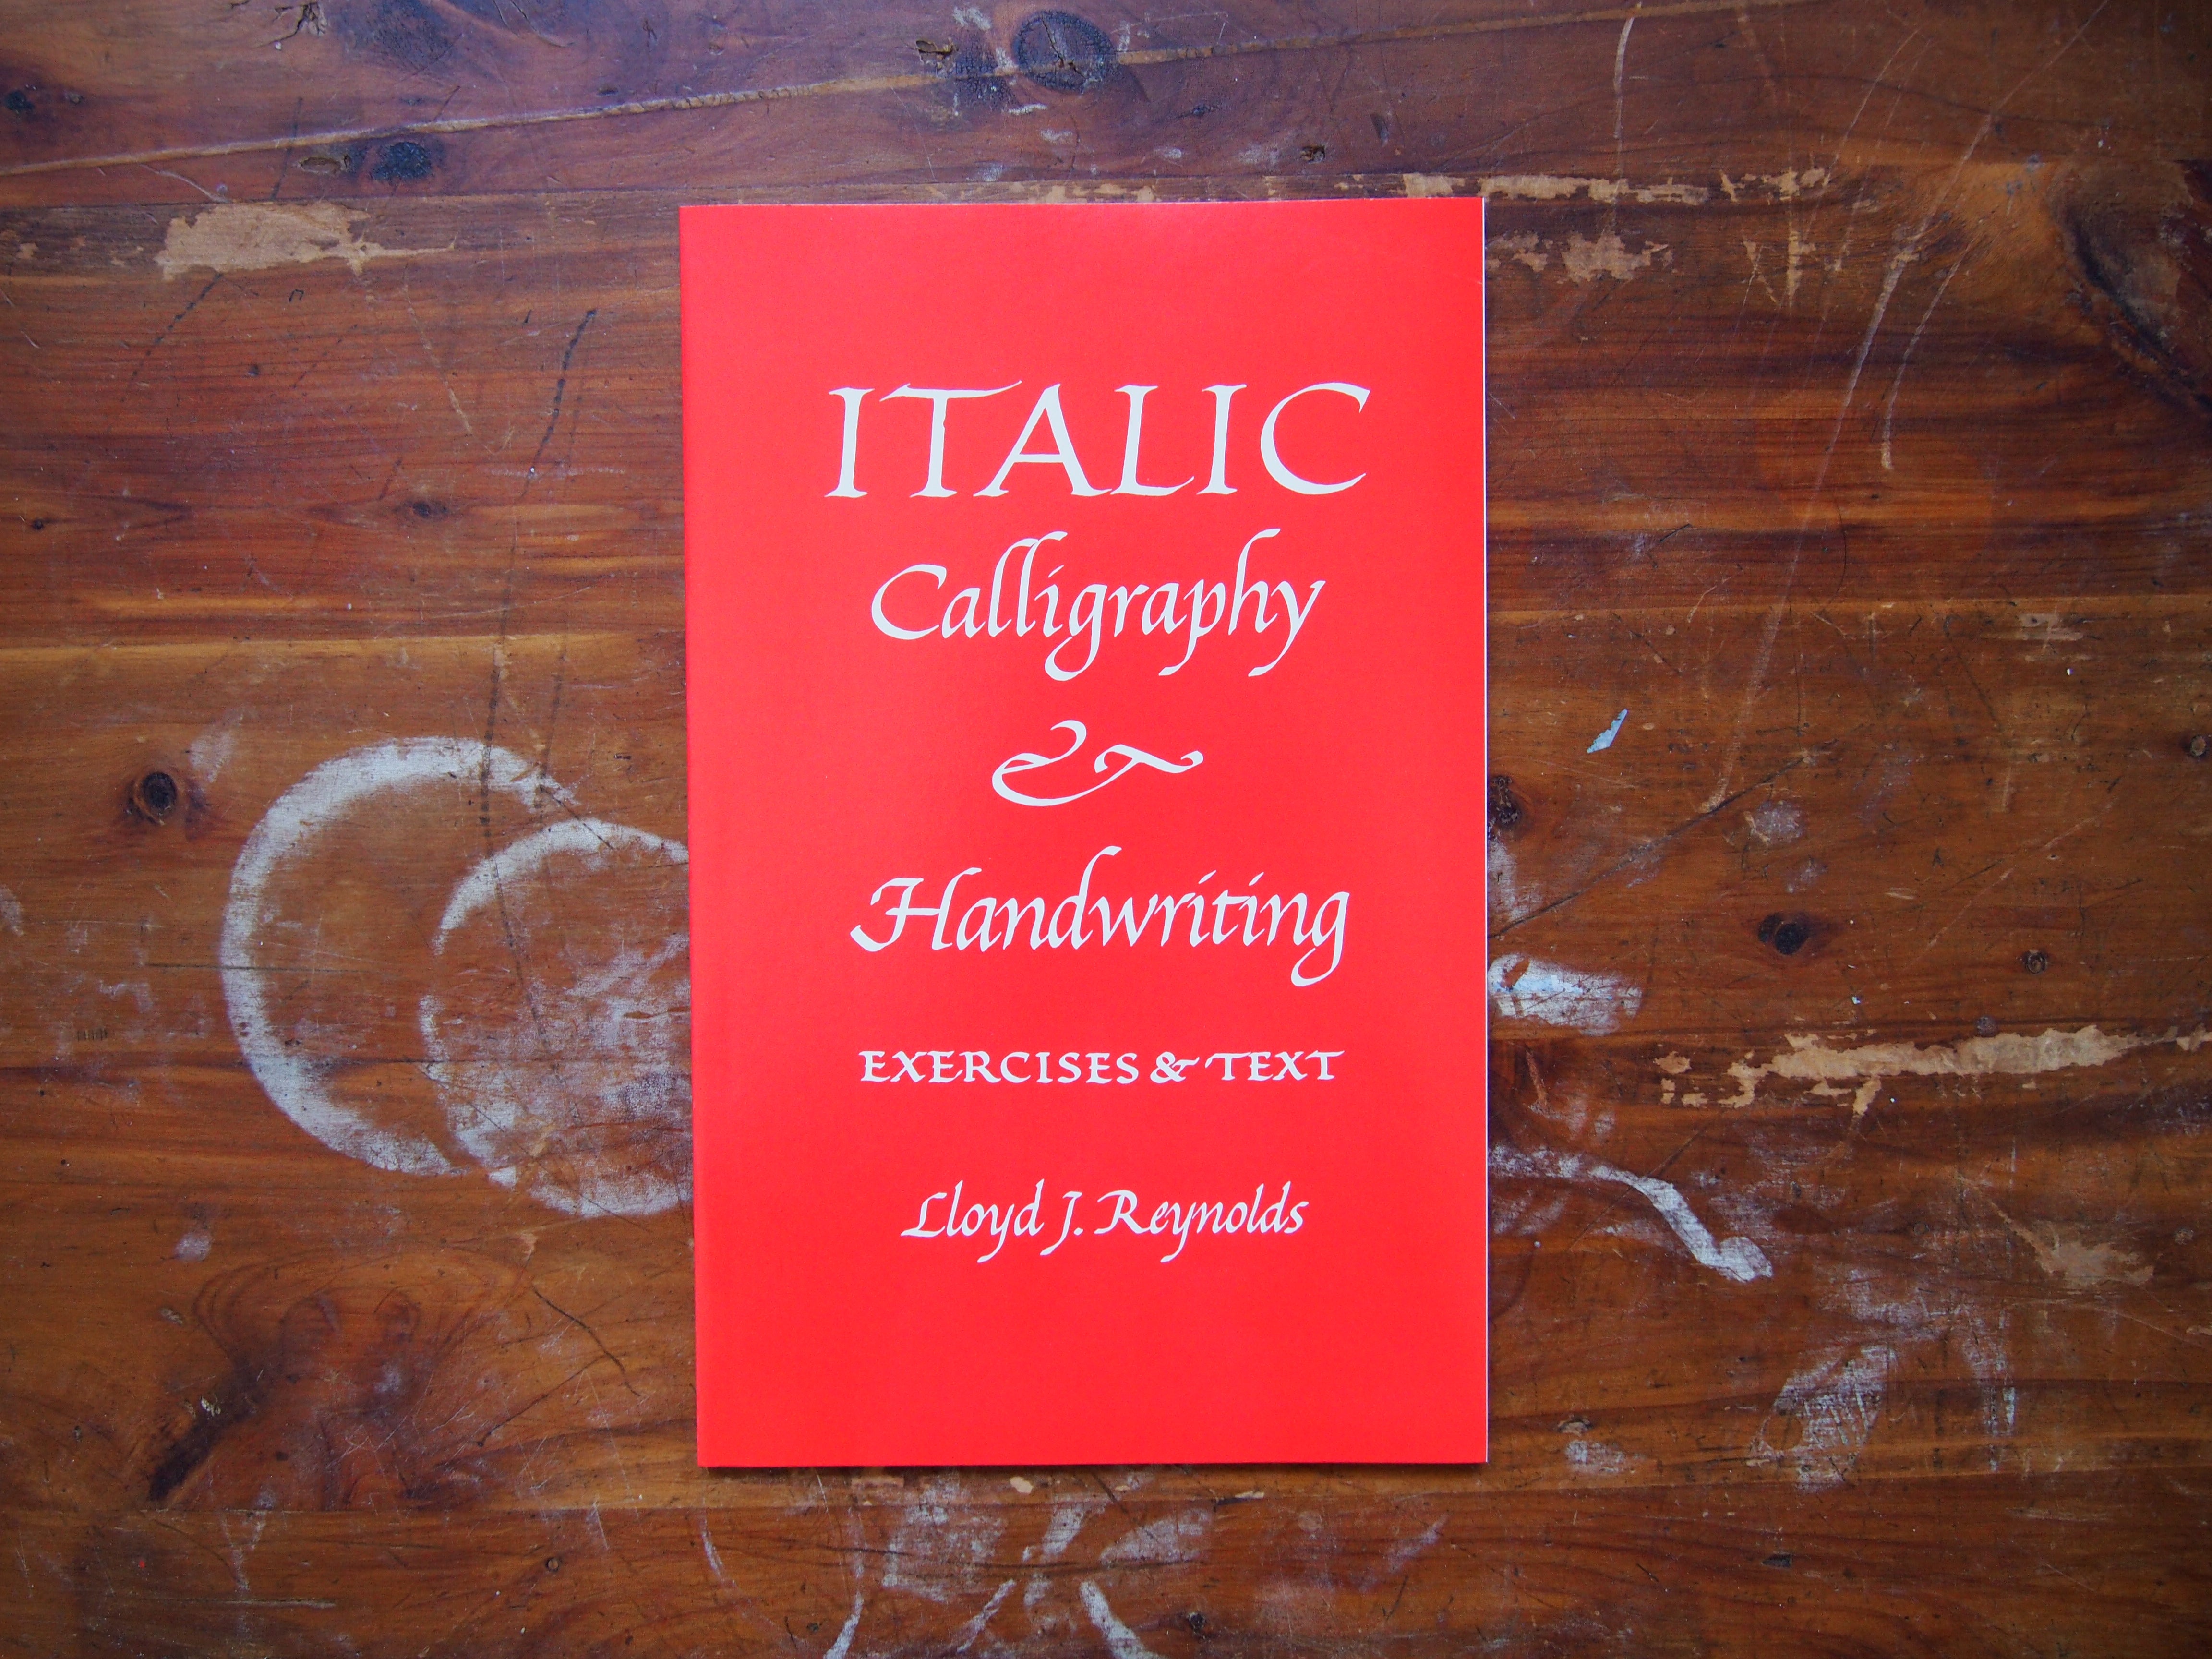 Italic Calligraphy & Handwriting, Exercises & Text by Lloyd J. Reynolds Calligraphy Workshop Toronto, Canada